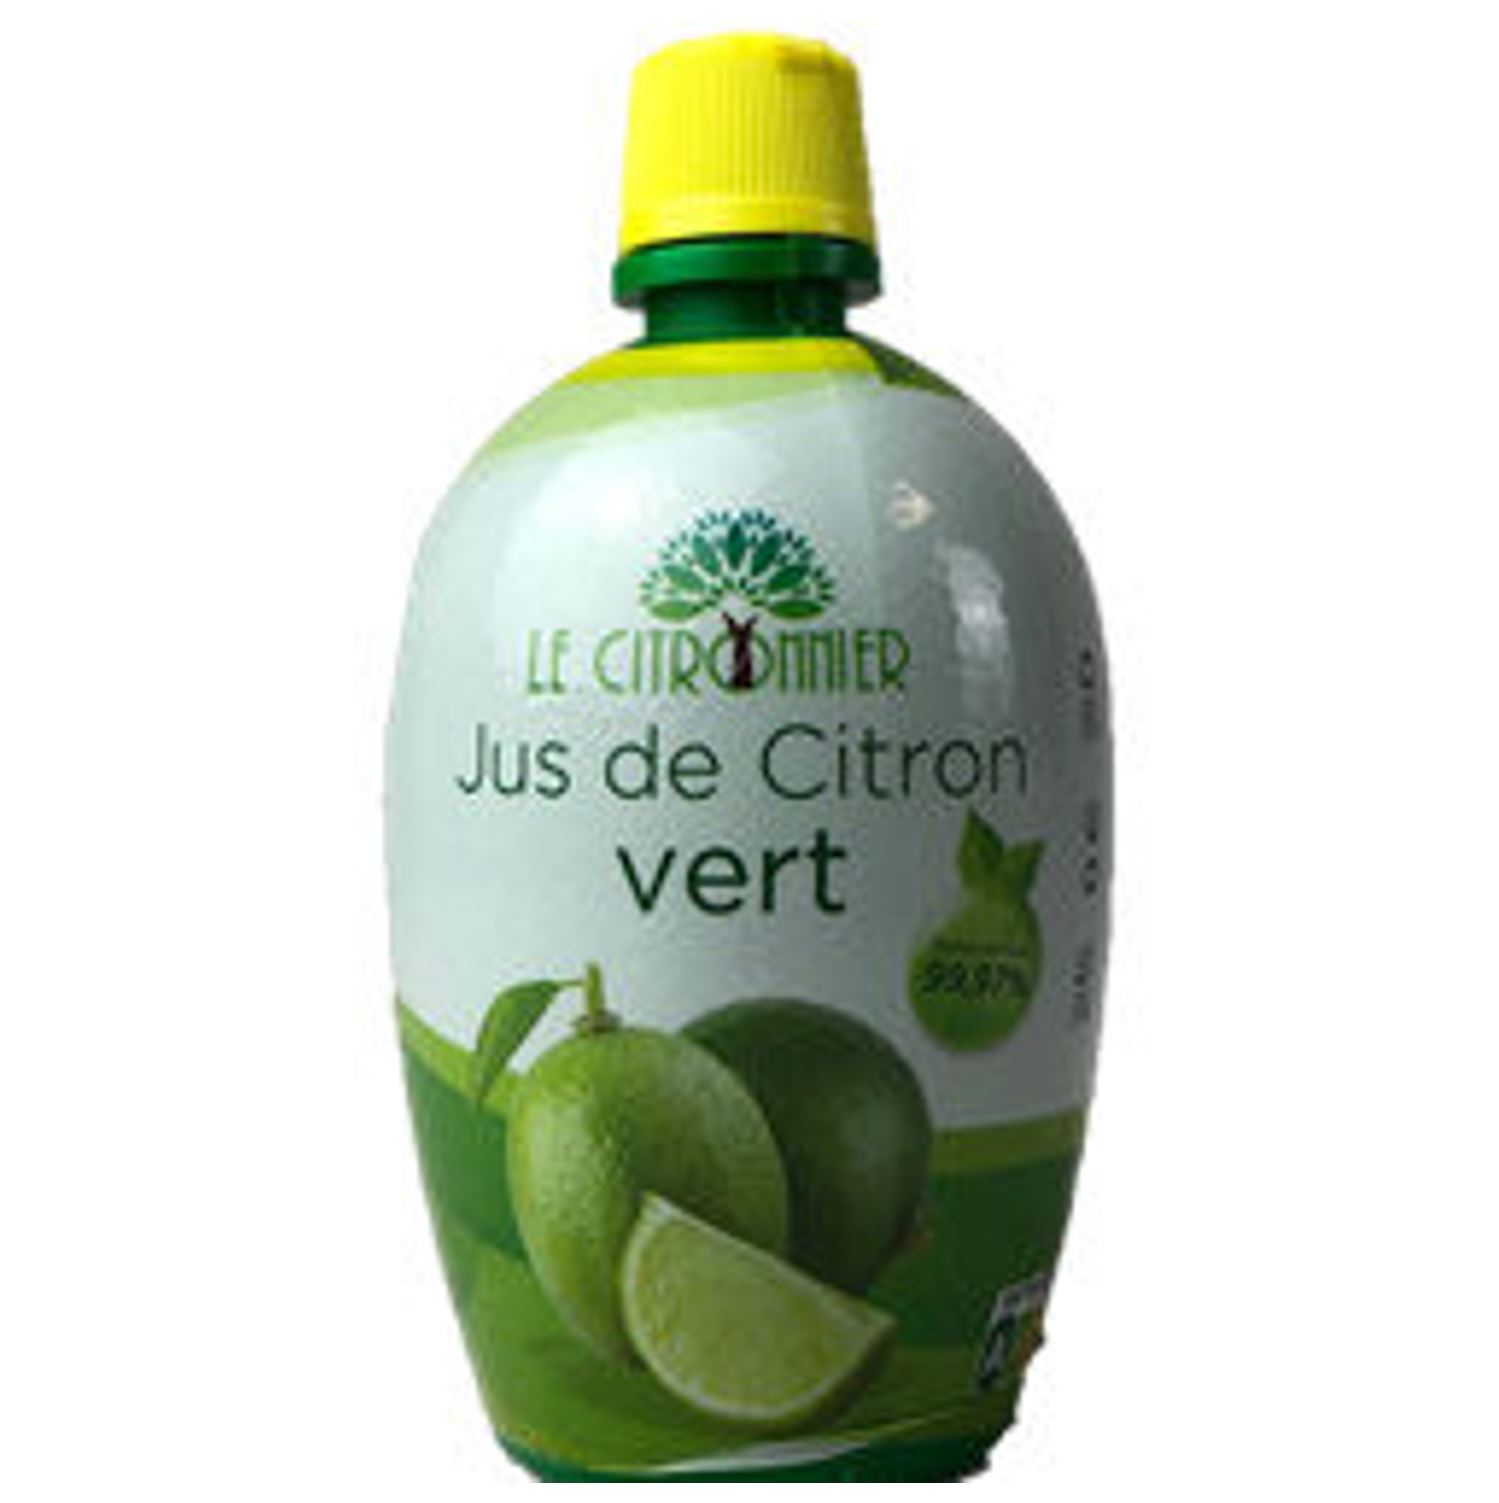 Jus de Citron Vert 99.97% de fruits